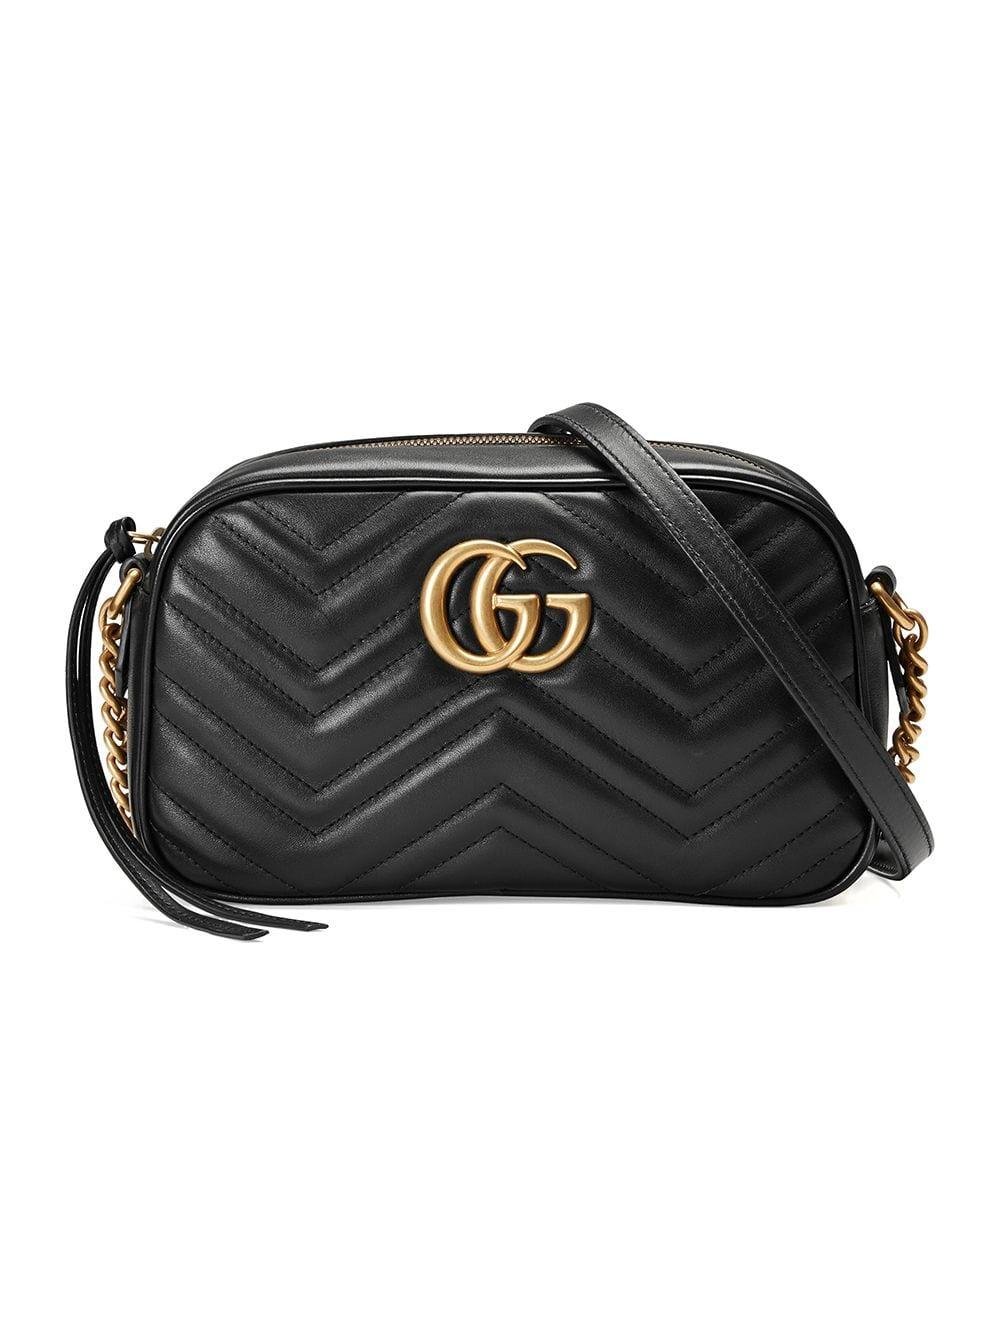 Gucci Leather Gg Marmont Matelassã© Shoulder Bag in Black Leather (Black) - Save 22% - Lyst